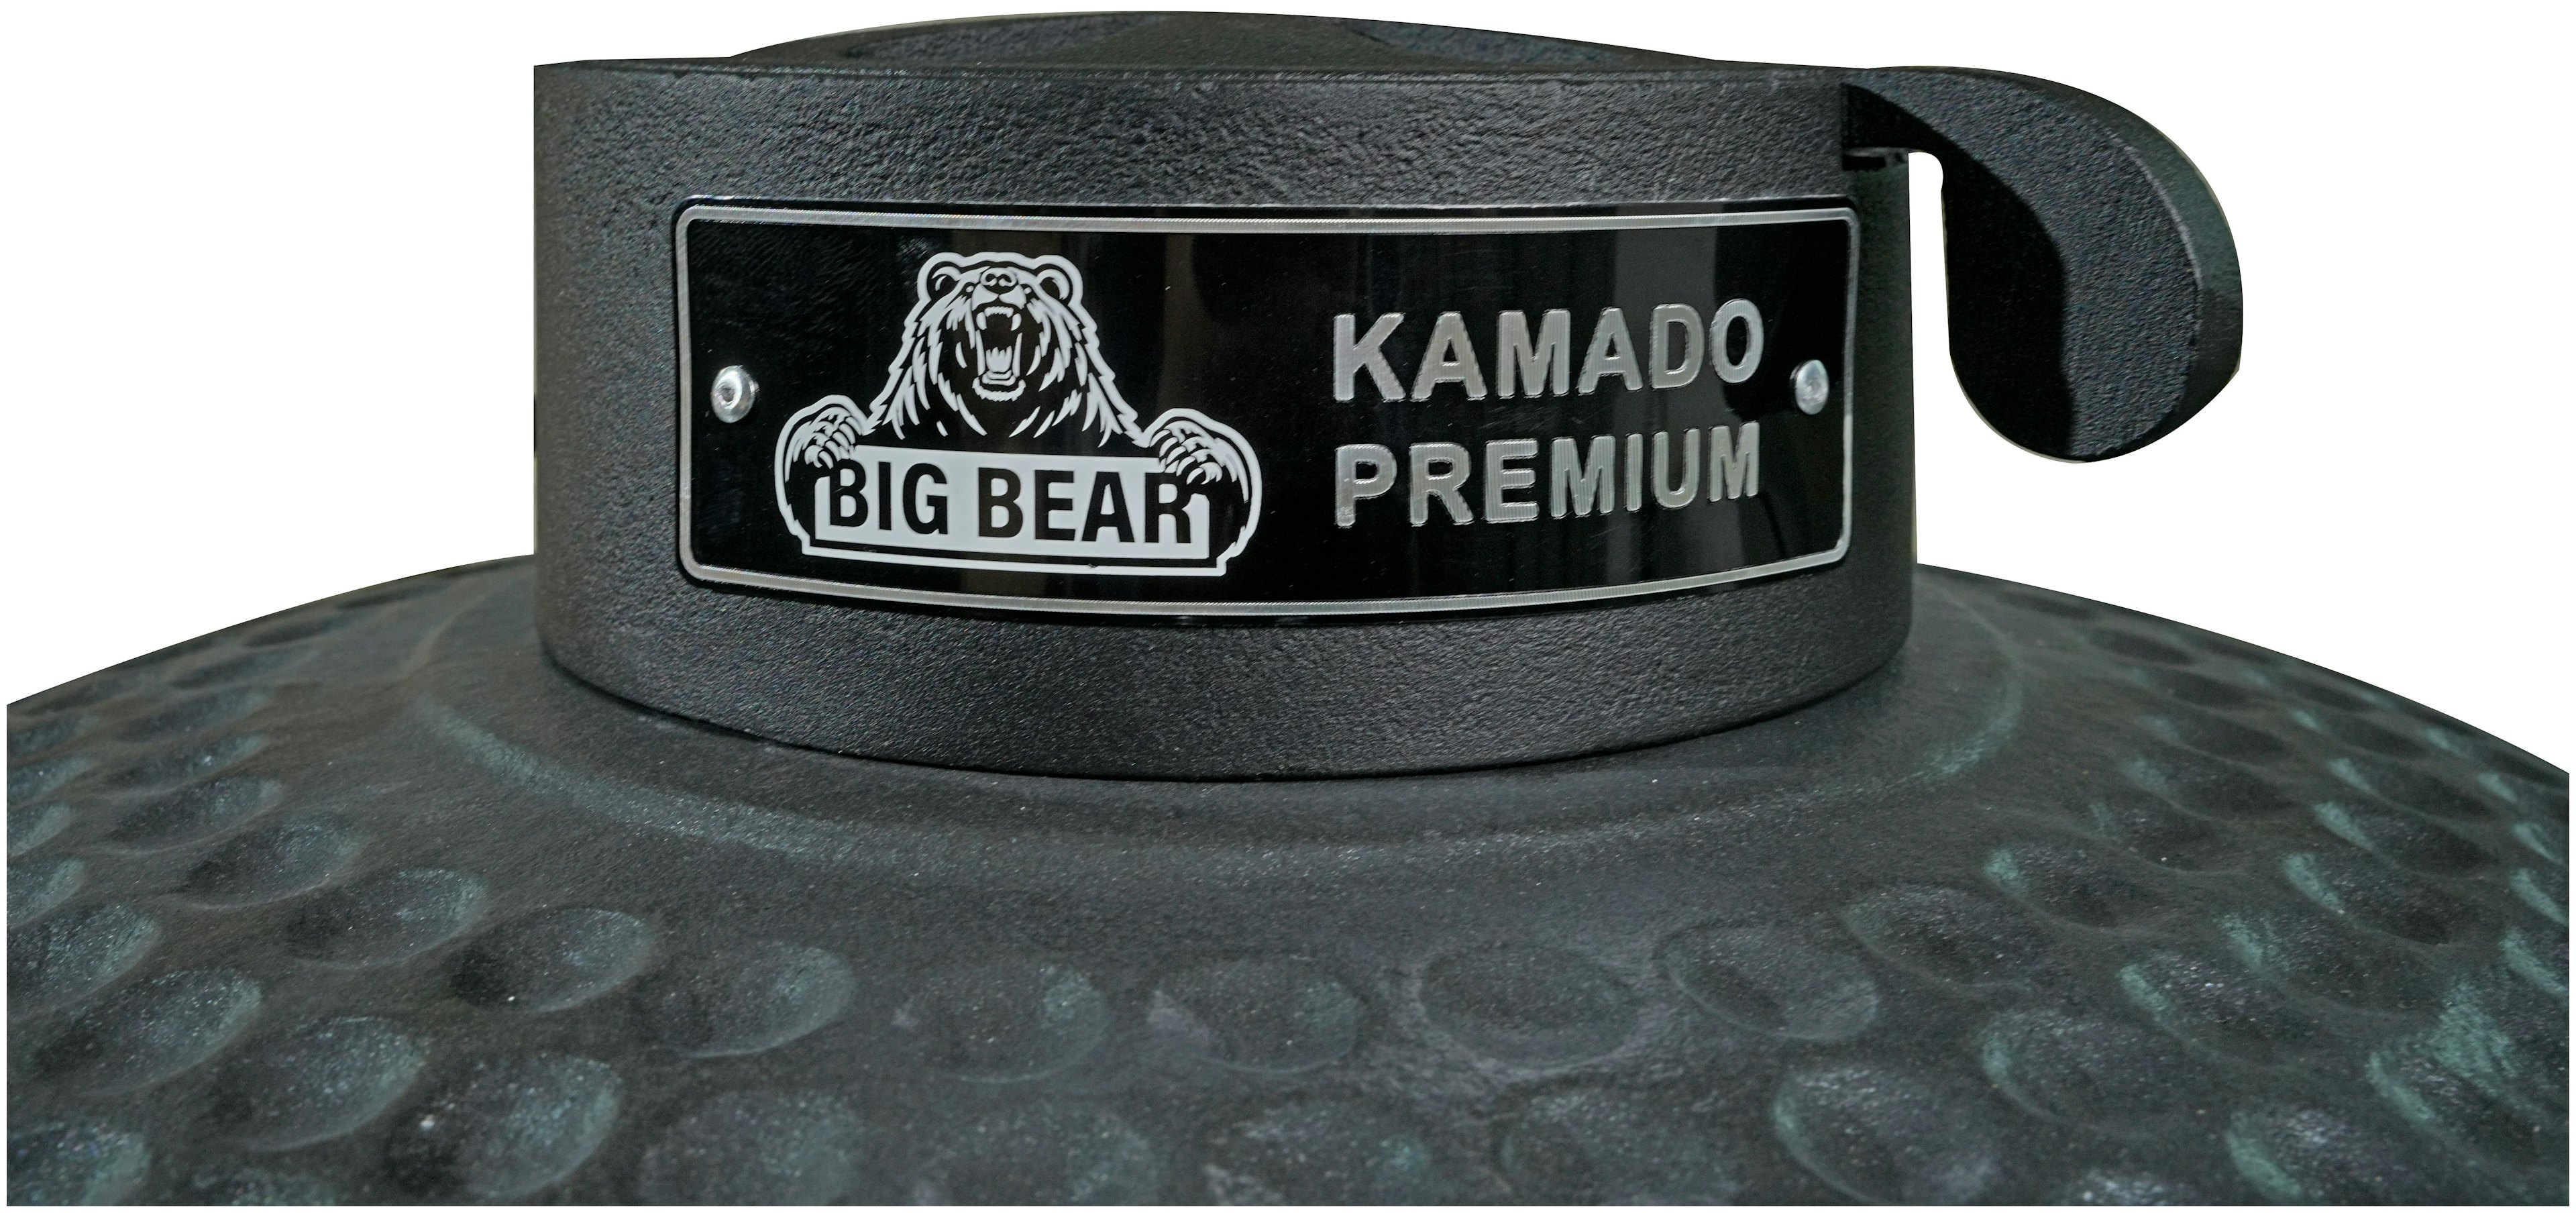 KAMADO XL BLACK + ACCESSOIRES van Big Bear afbeelding 6